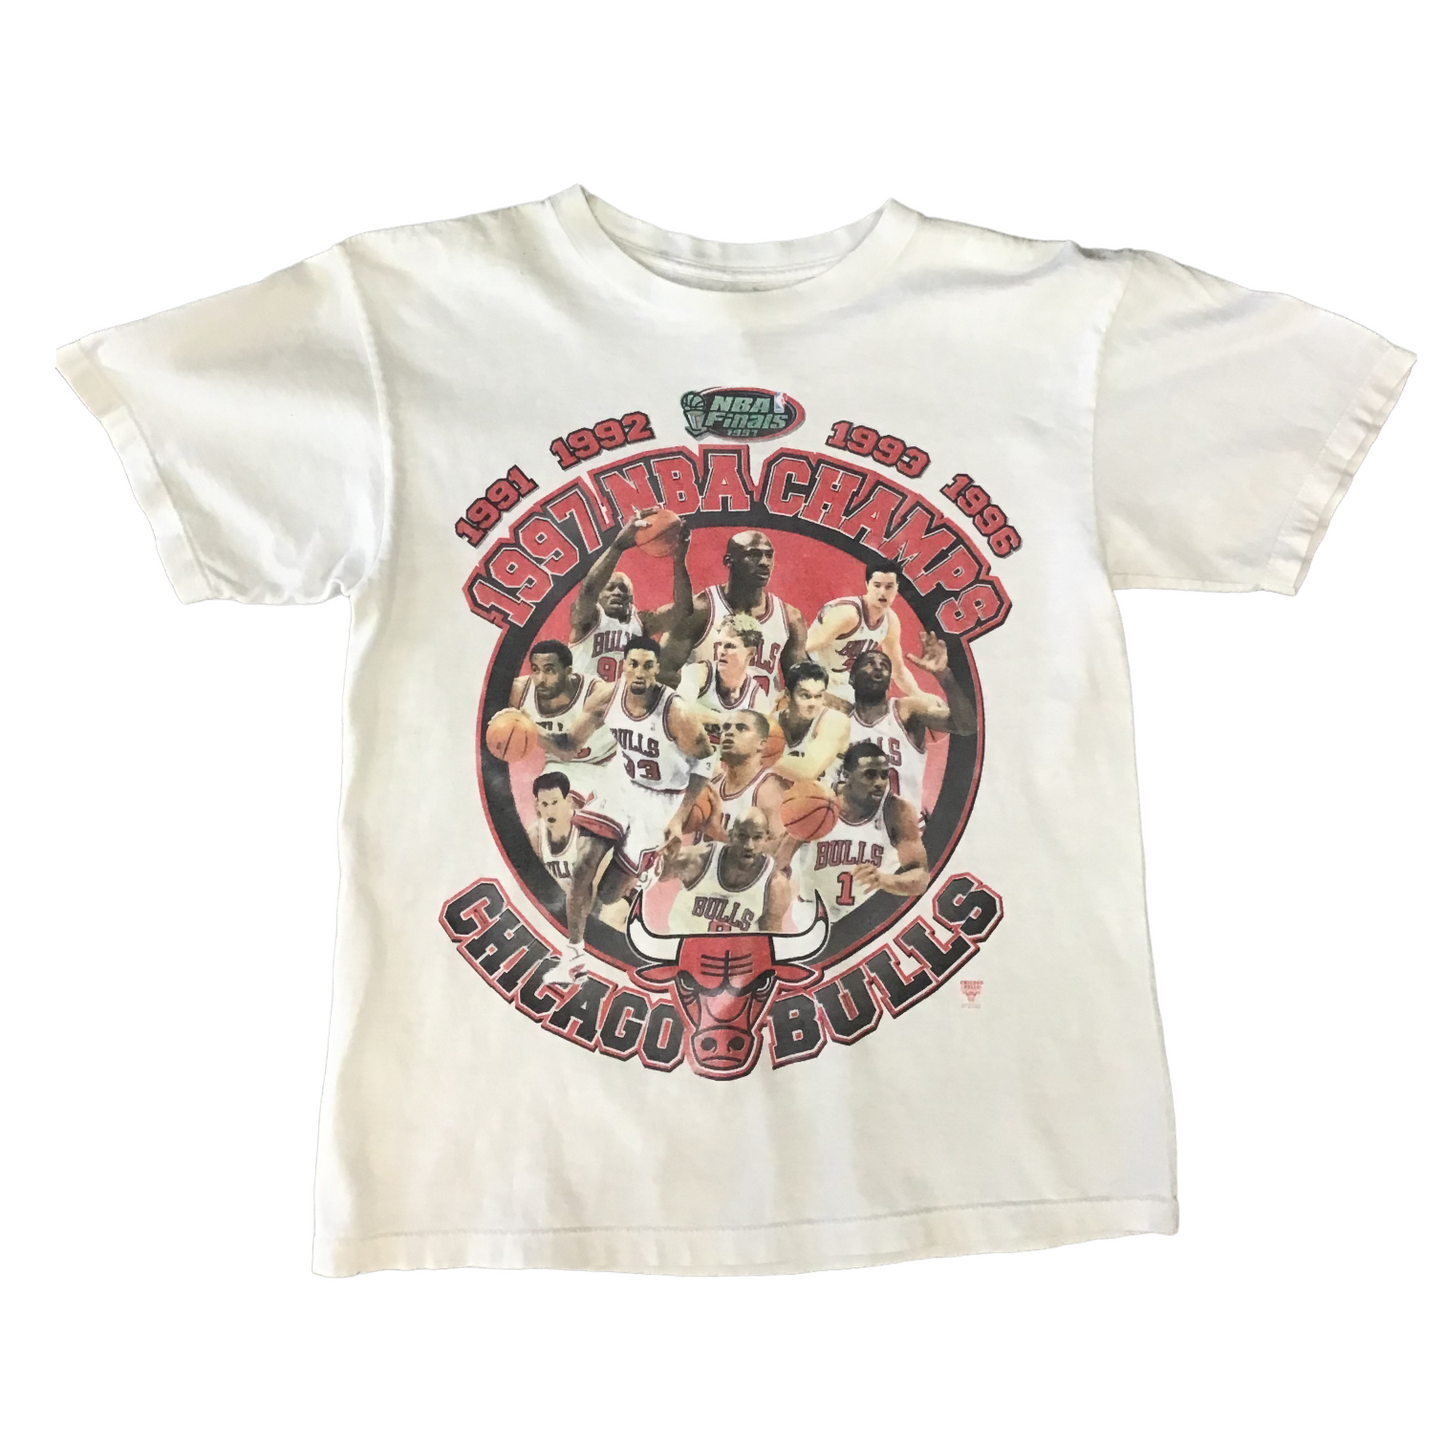 1997 Chicago Bulls NBA Champions vintage sports shirt